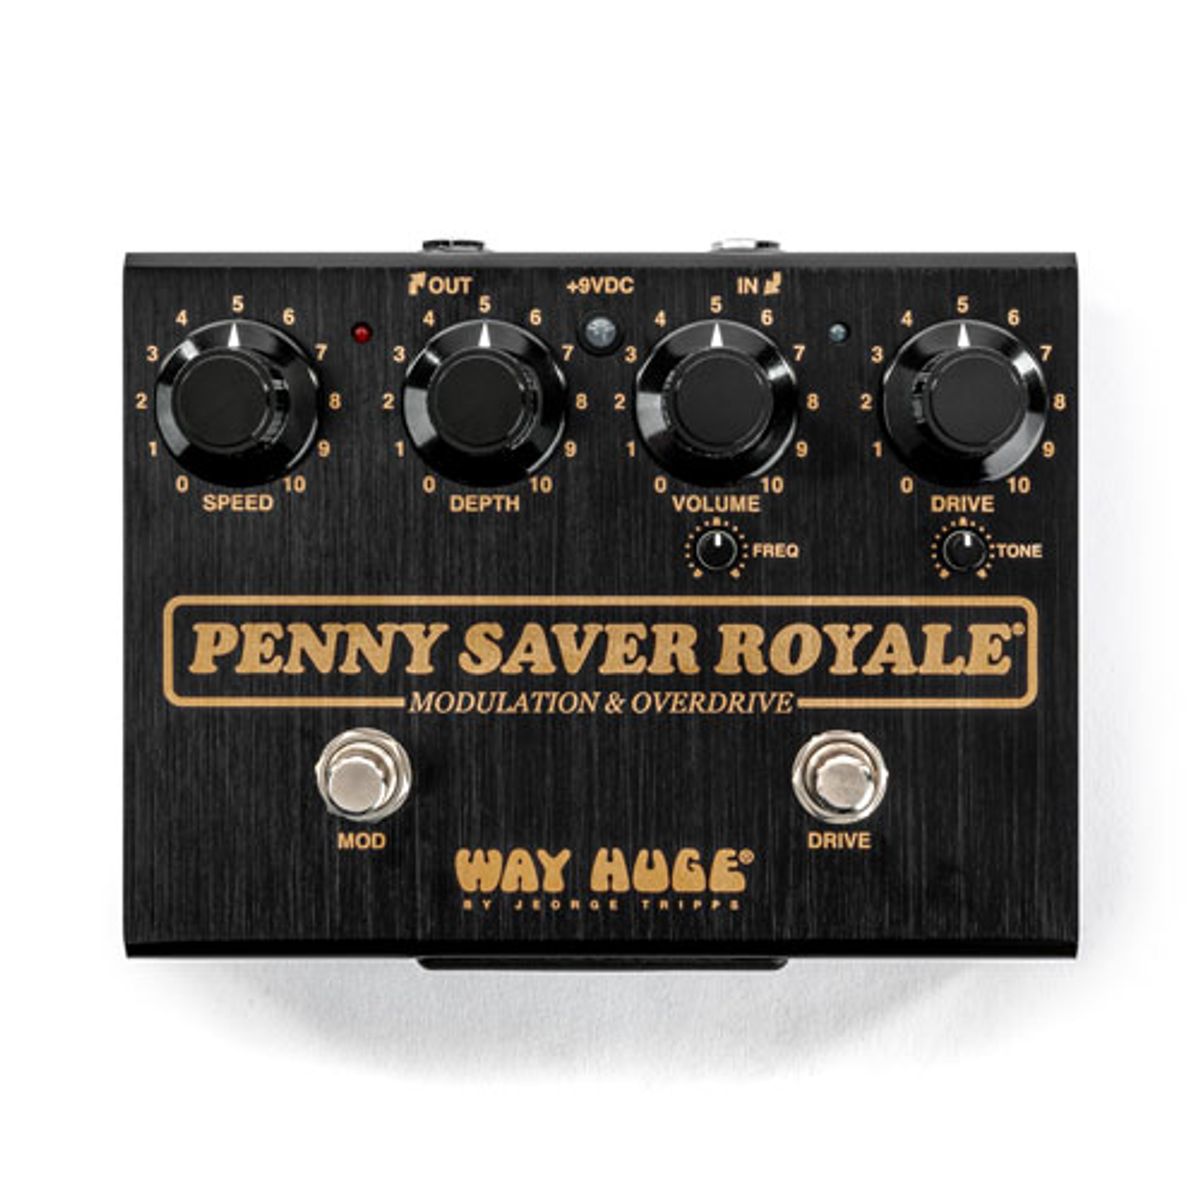 Way Huge and Joe Bonamassa Unveil the Penny Saver Royale Modulation & Overdrive